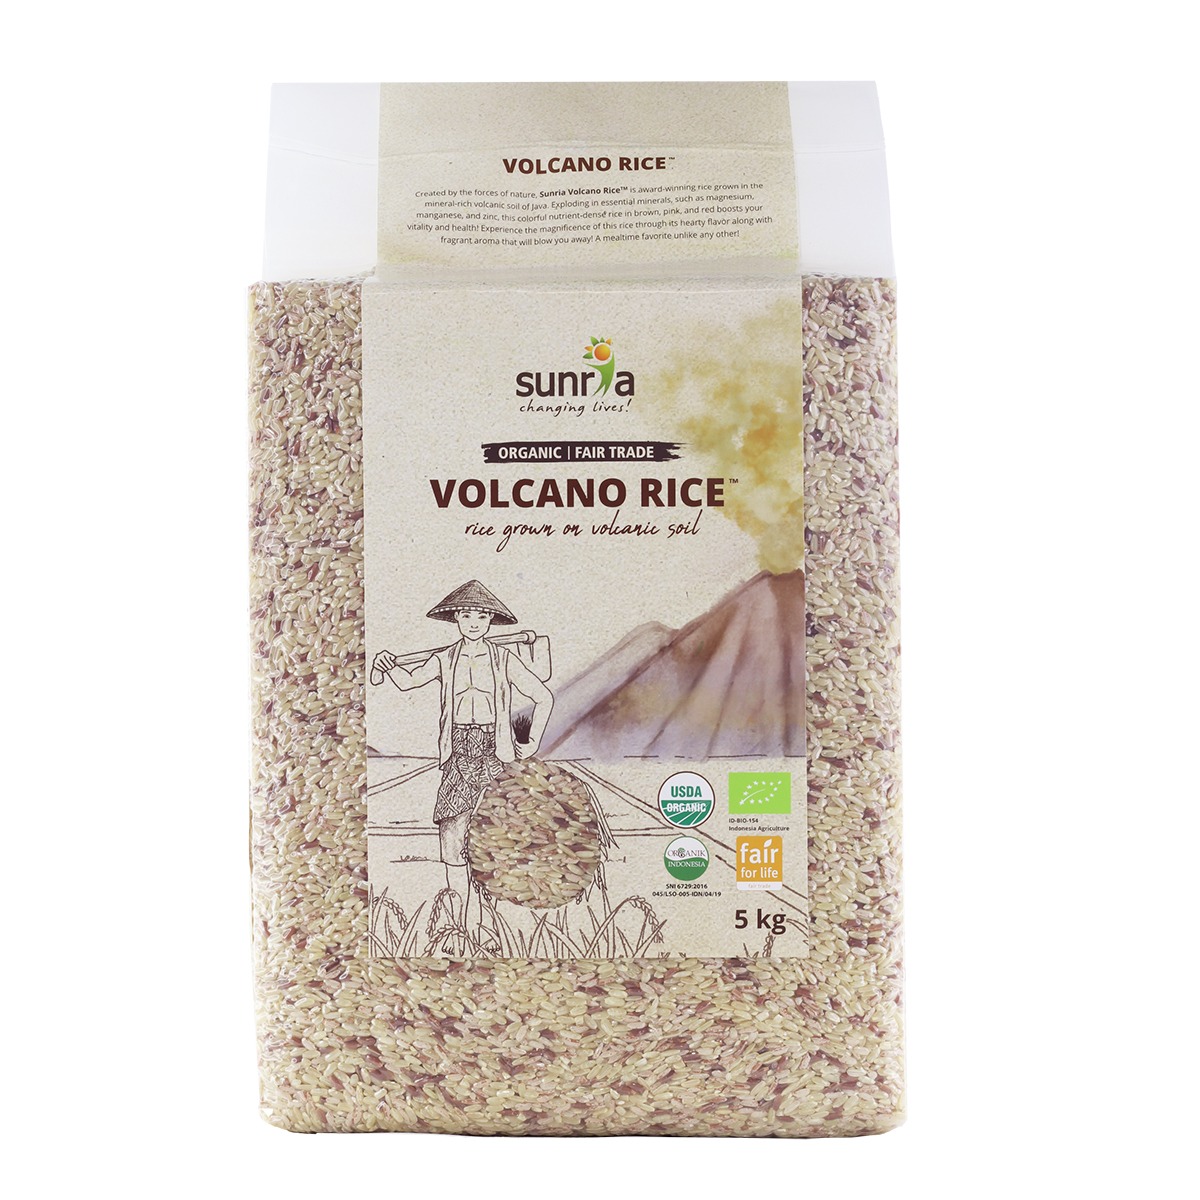 Sunria Volcano Rice 5kg